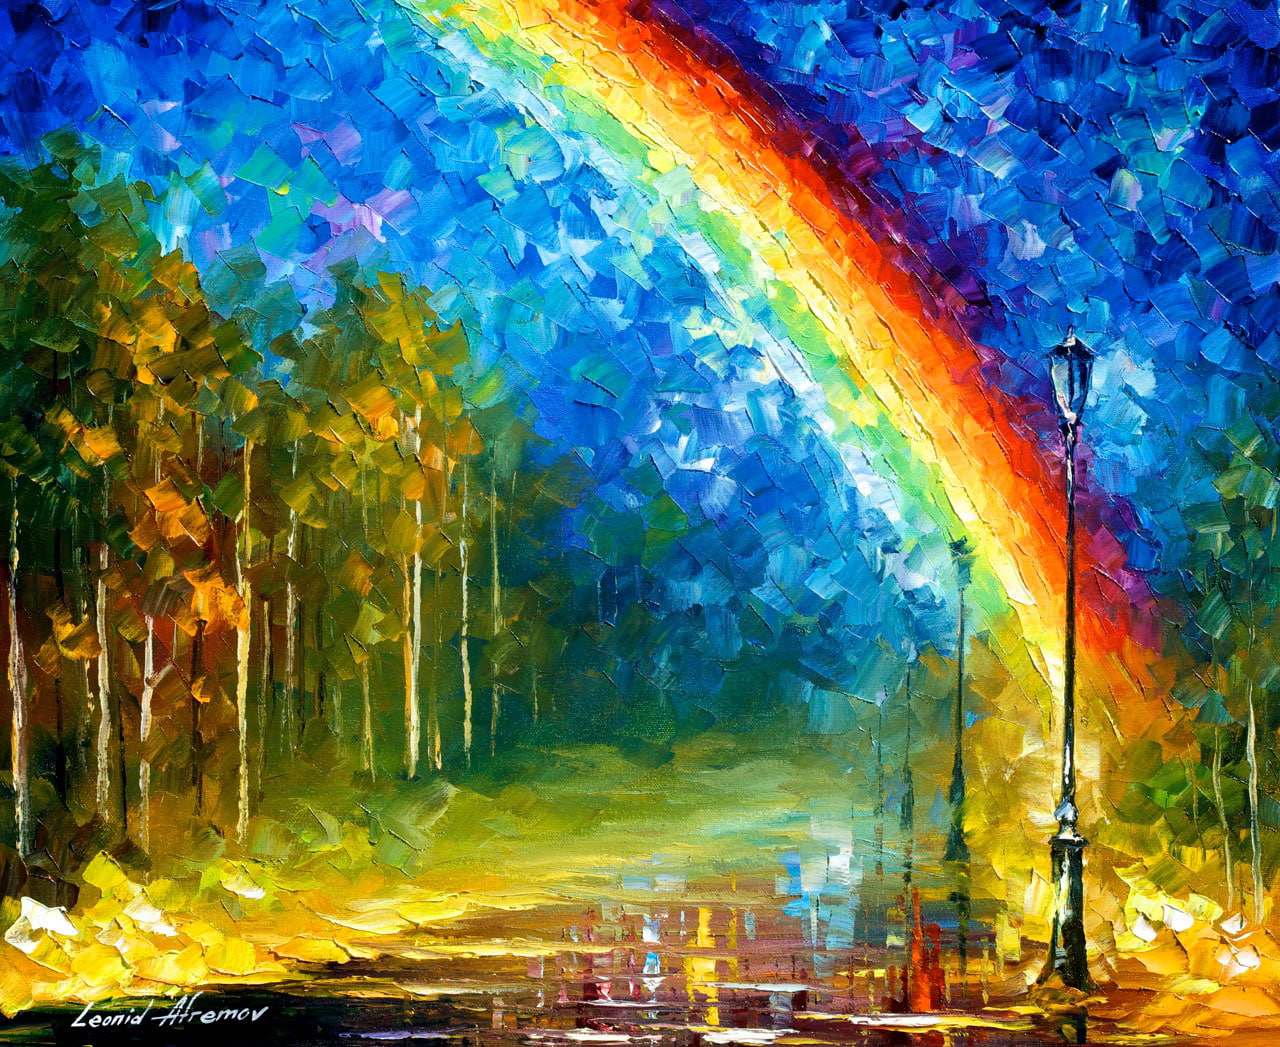 Rainbow Unicorn, Digital Art Download